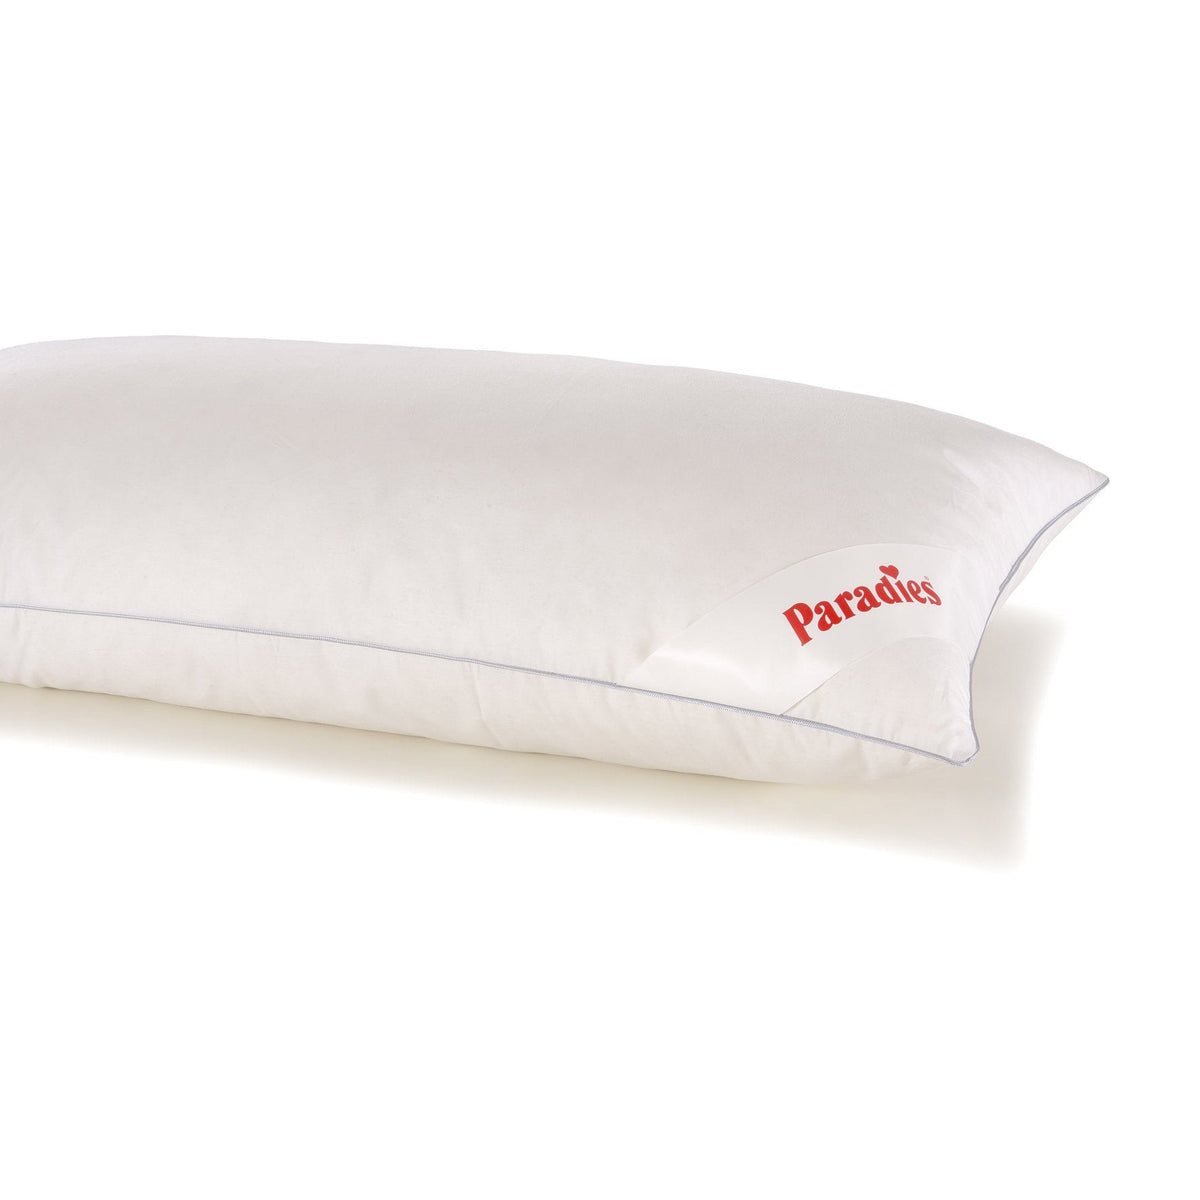 Paradies Mali Pillows